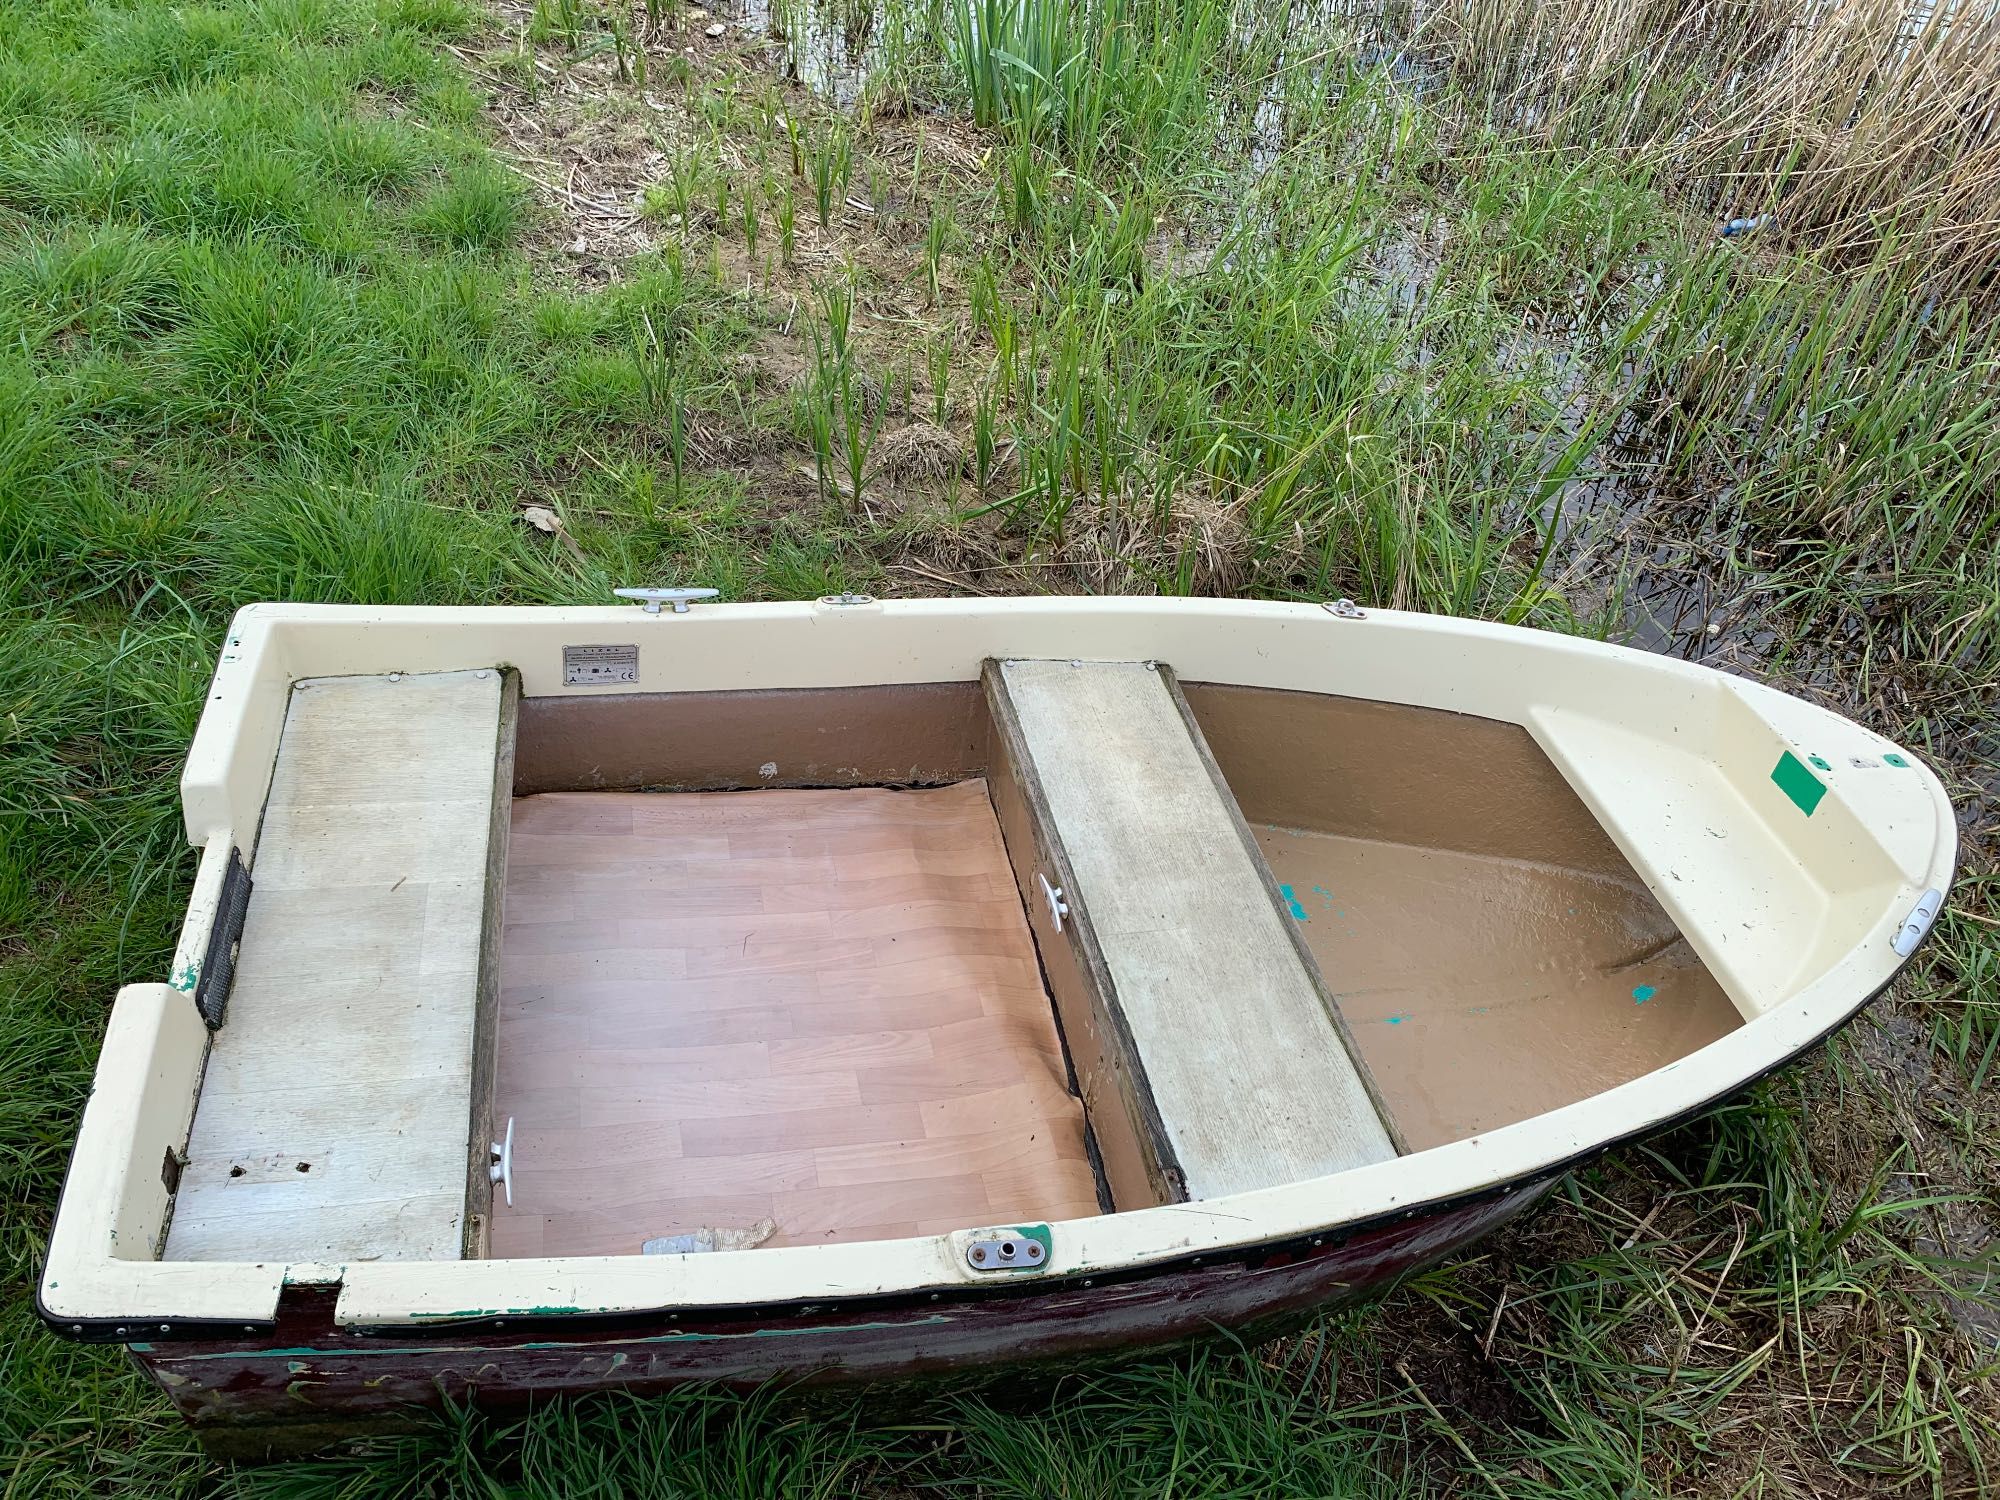 łódź wędkarska wiosłowa